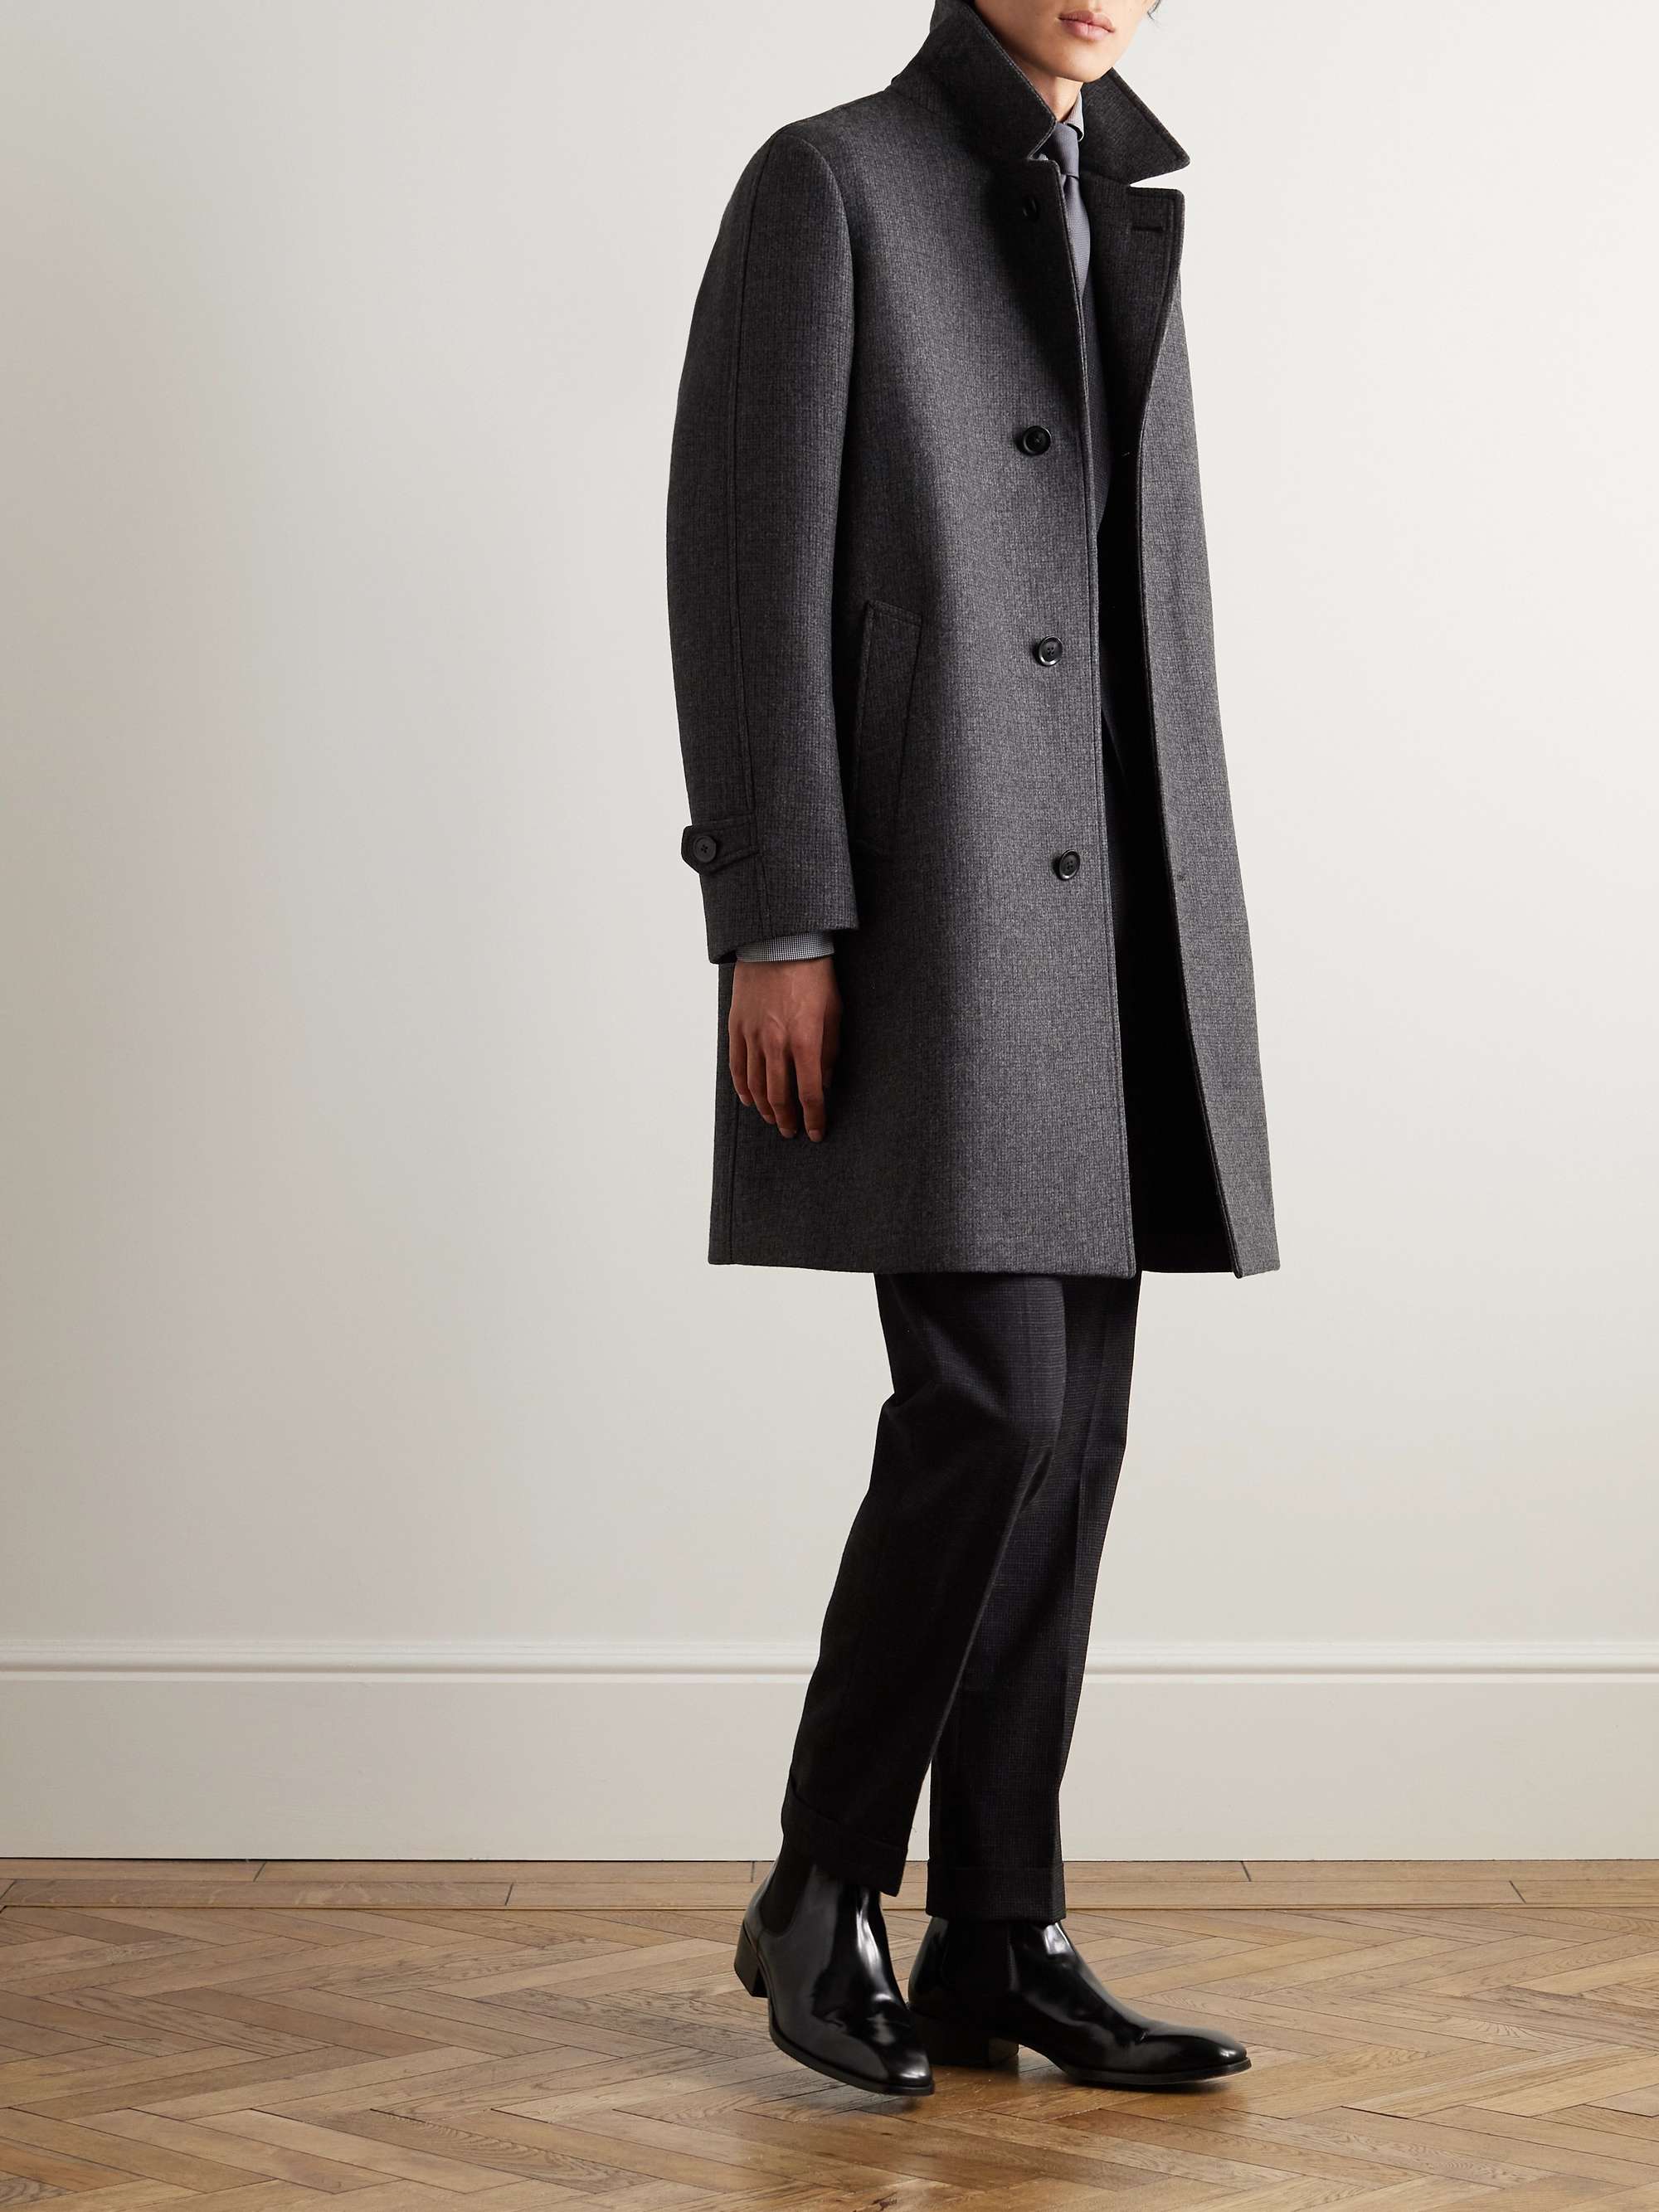 TOM FORD Checked Virgin Wool and Cashmere-Blend Coat for Men | MR PORTER